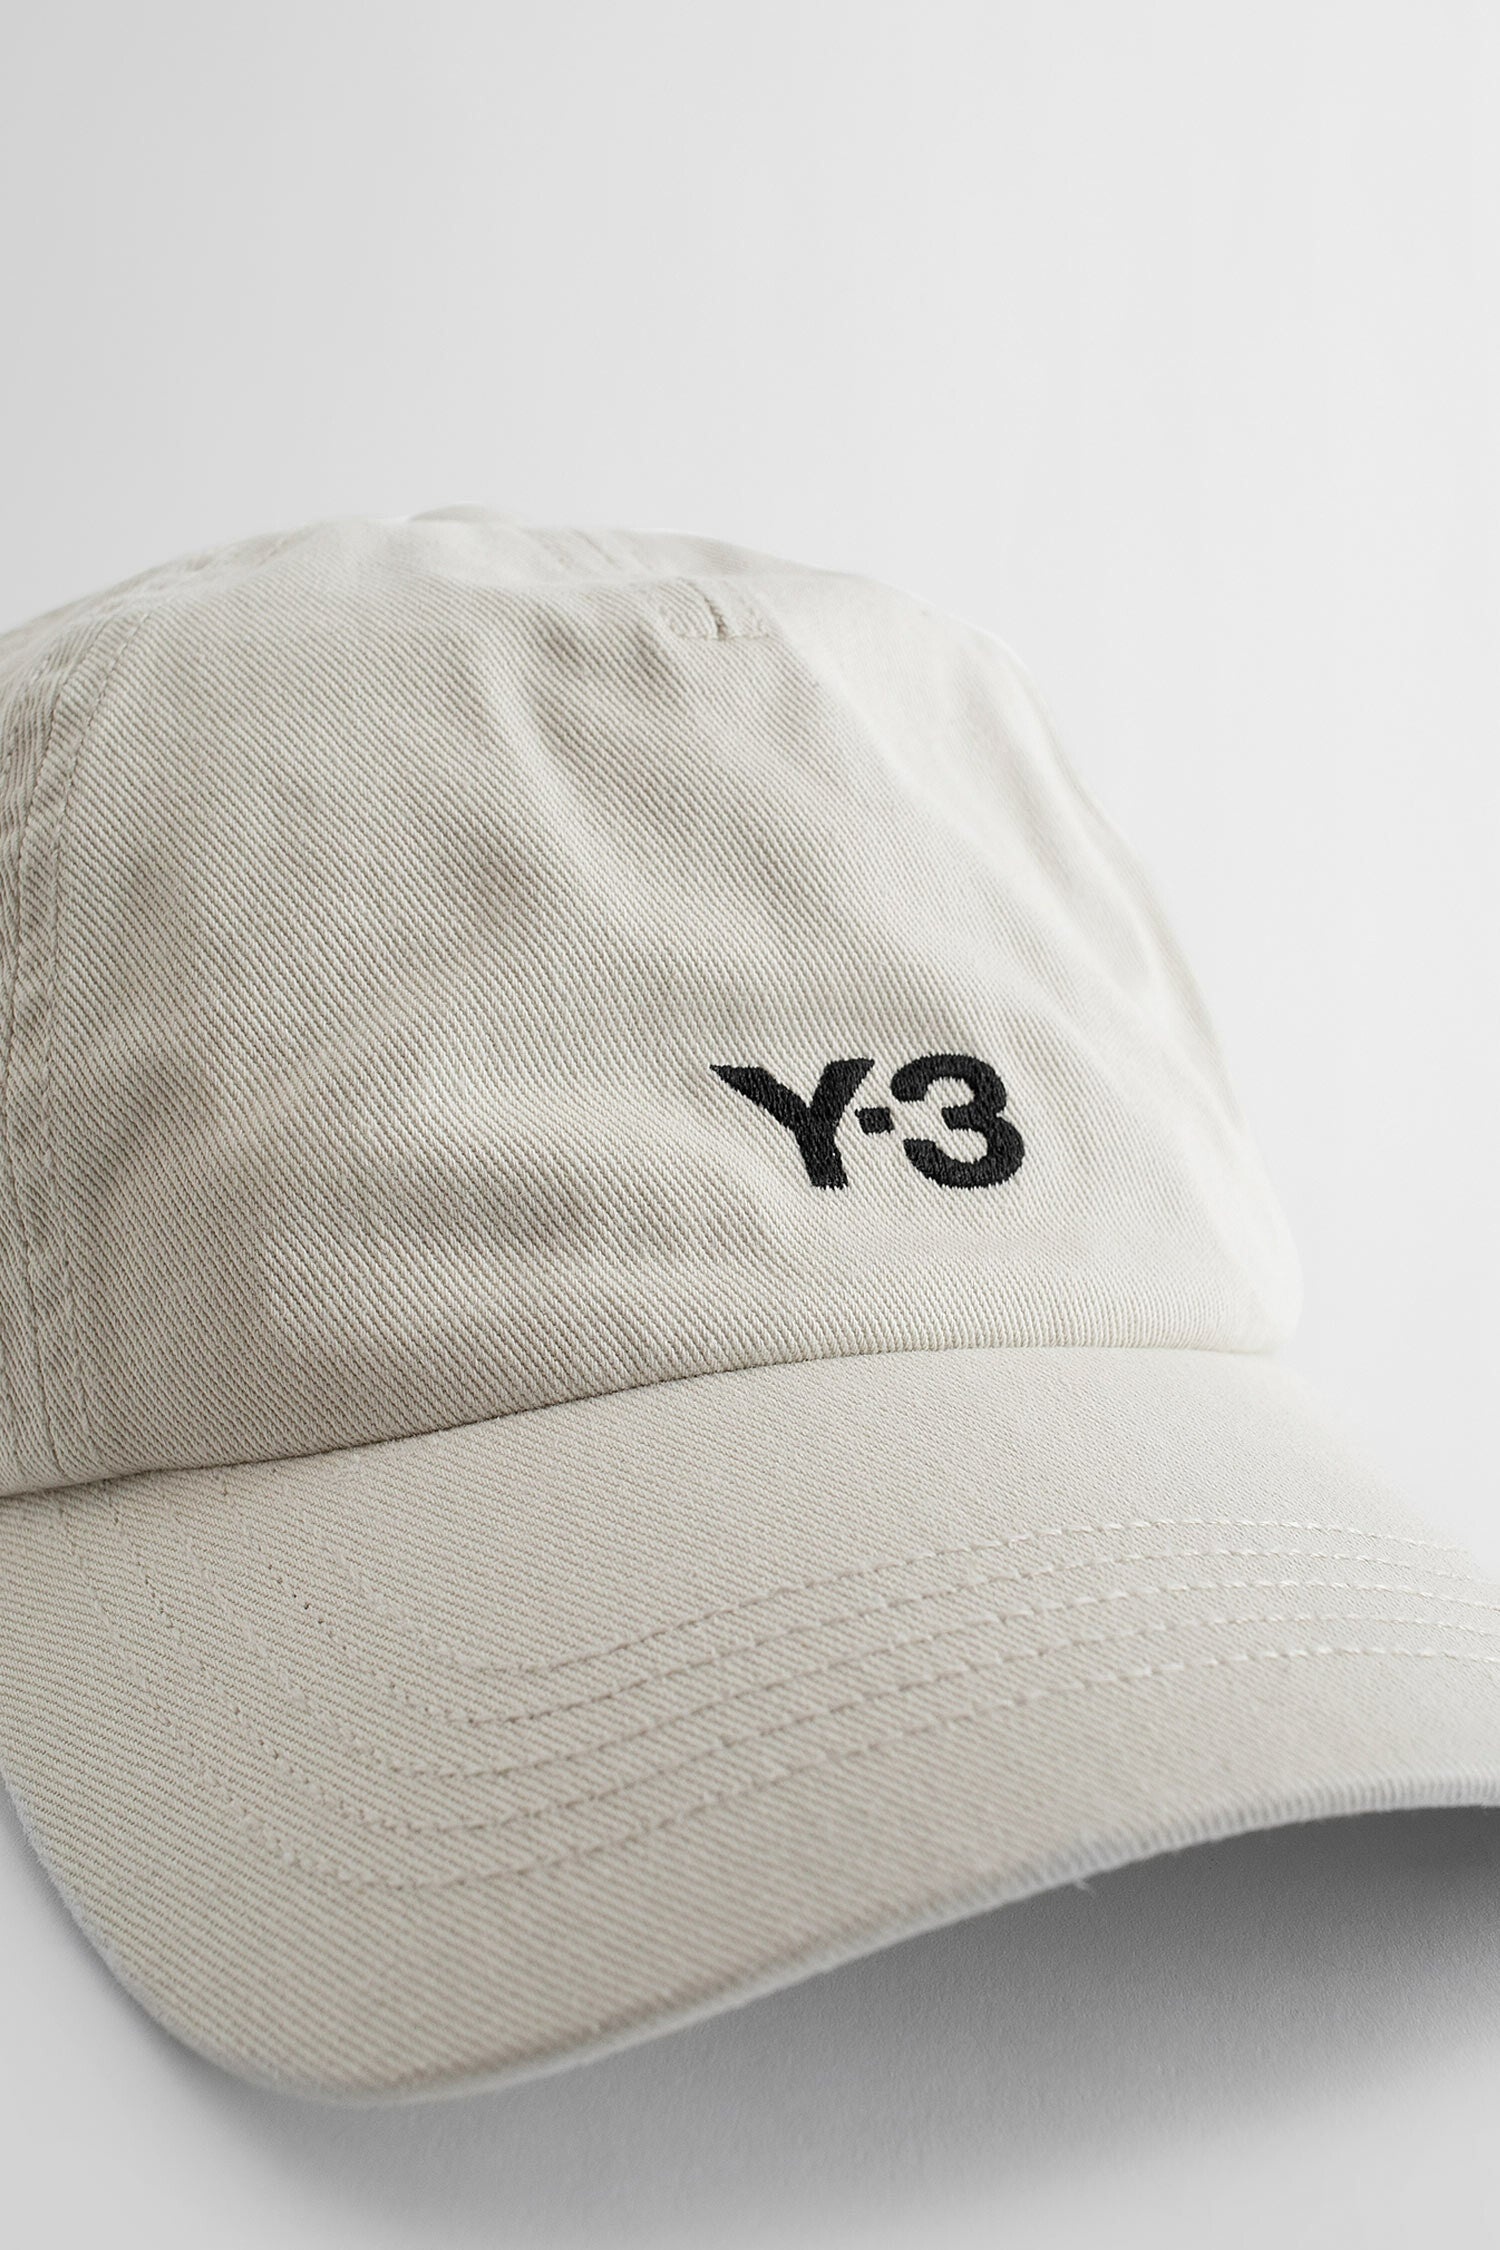 Y-3 UNISEX OFF-WHITE HATS - 4